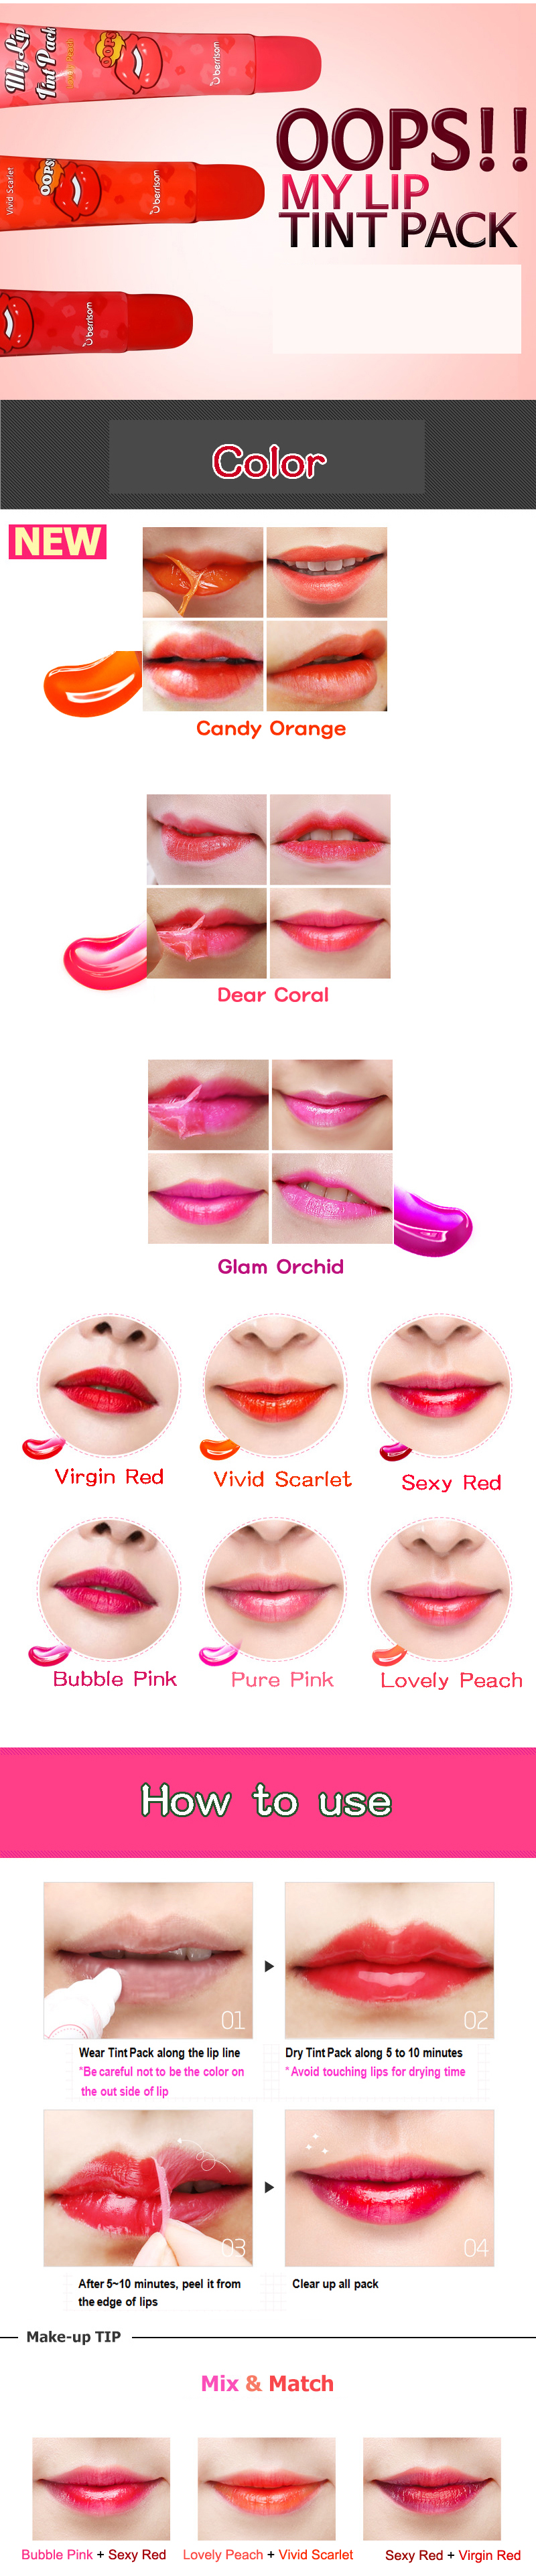 2-berrisom-season3-lip-makeup-my-lip-tint-pack-6-strawberrycoco.jpg